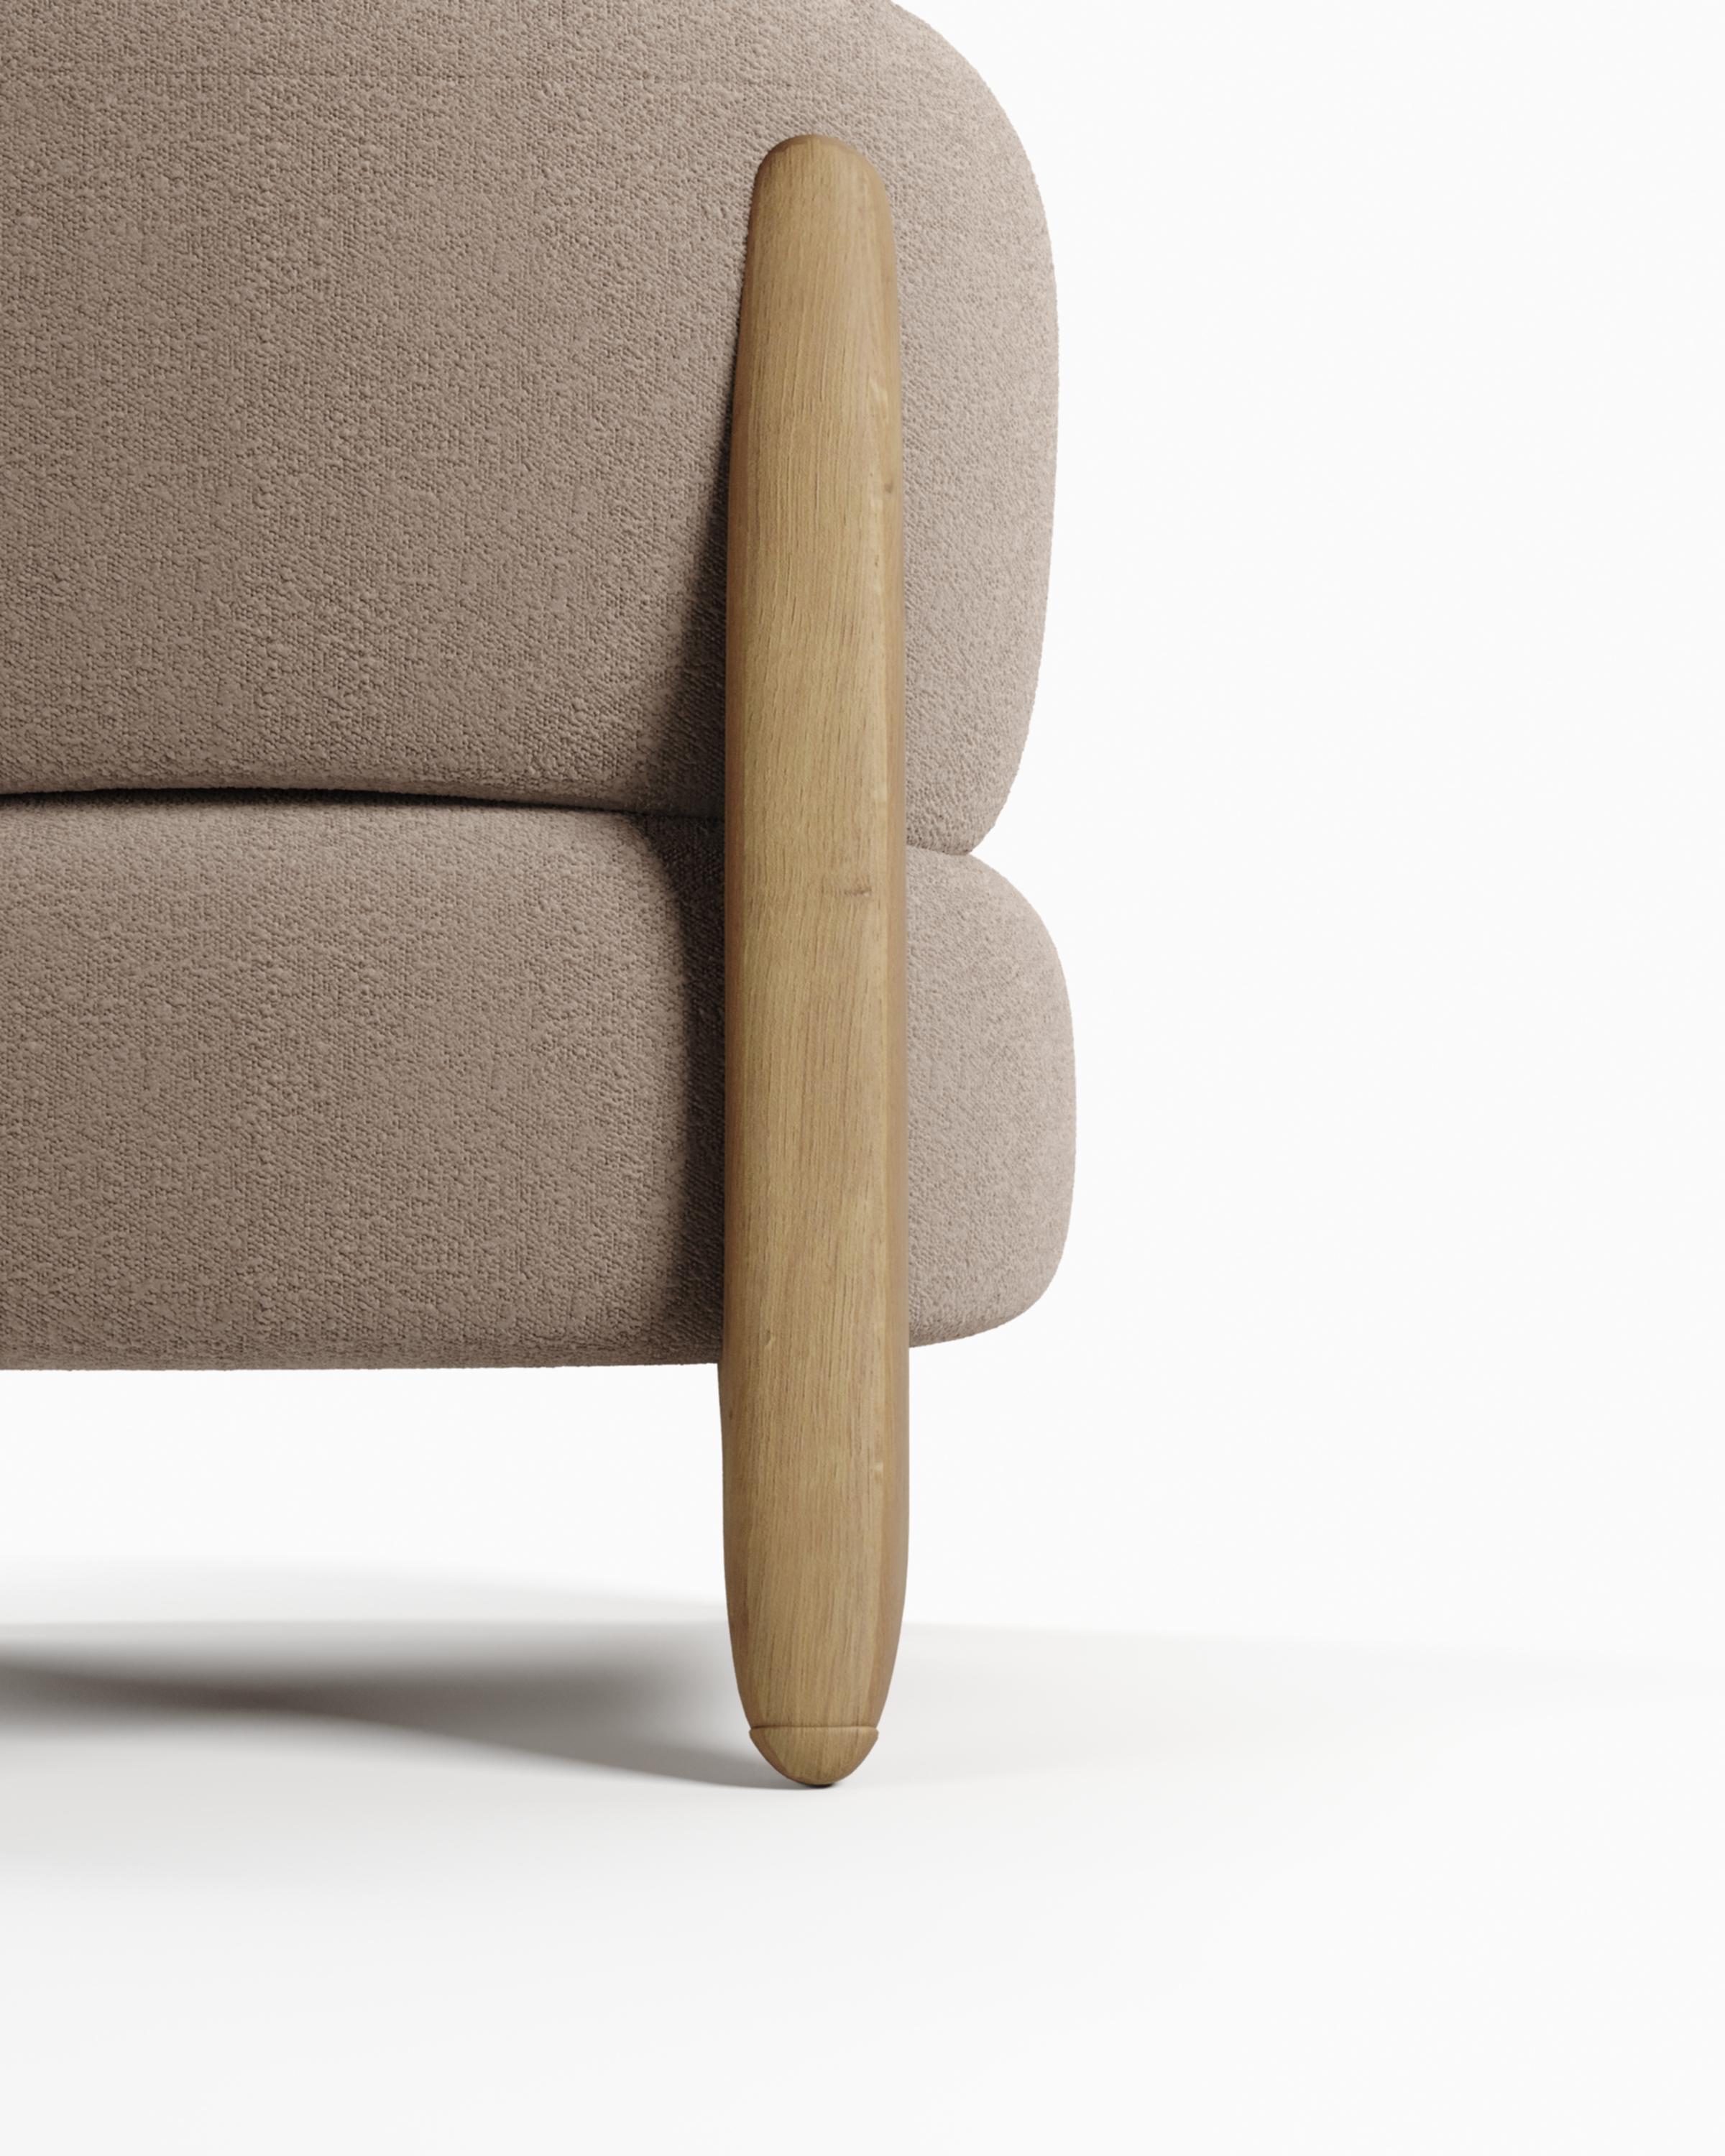 Contemporary Modern Tobo Sofa in Fabric & Oak Wood by Collector Studio In New Condition For Sale In Castelo da Maia, PT